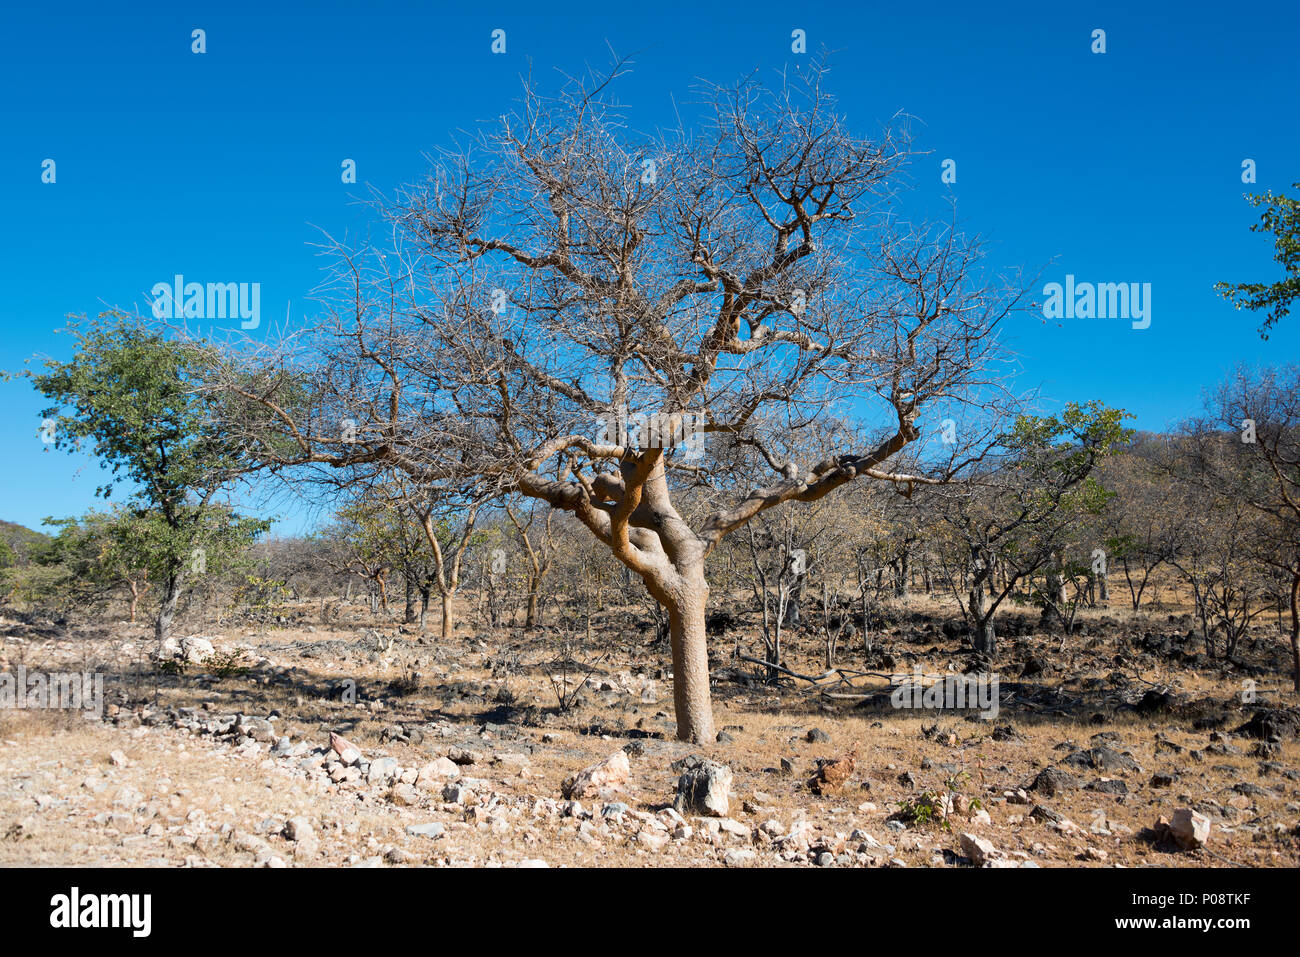 Guggal (Commiphora wightii) in barren landscape, Kaokoveld, Namibia Stock Photo